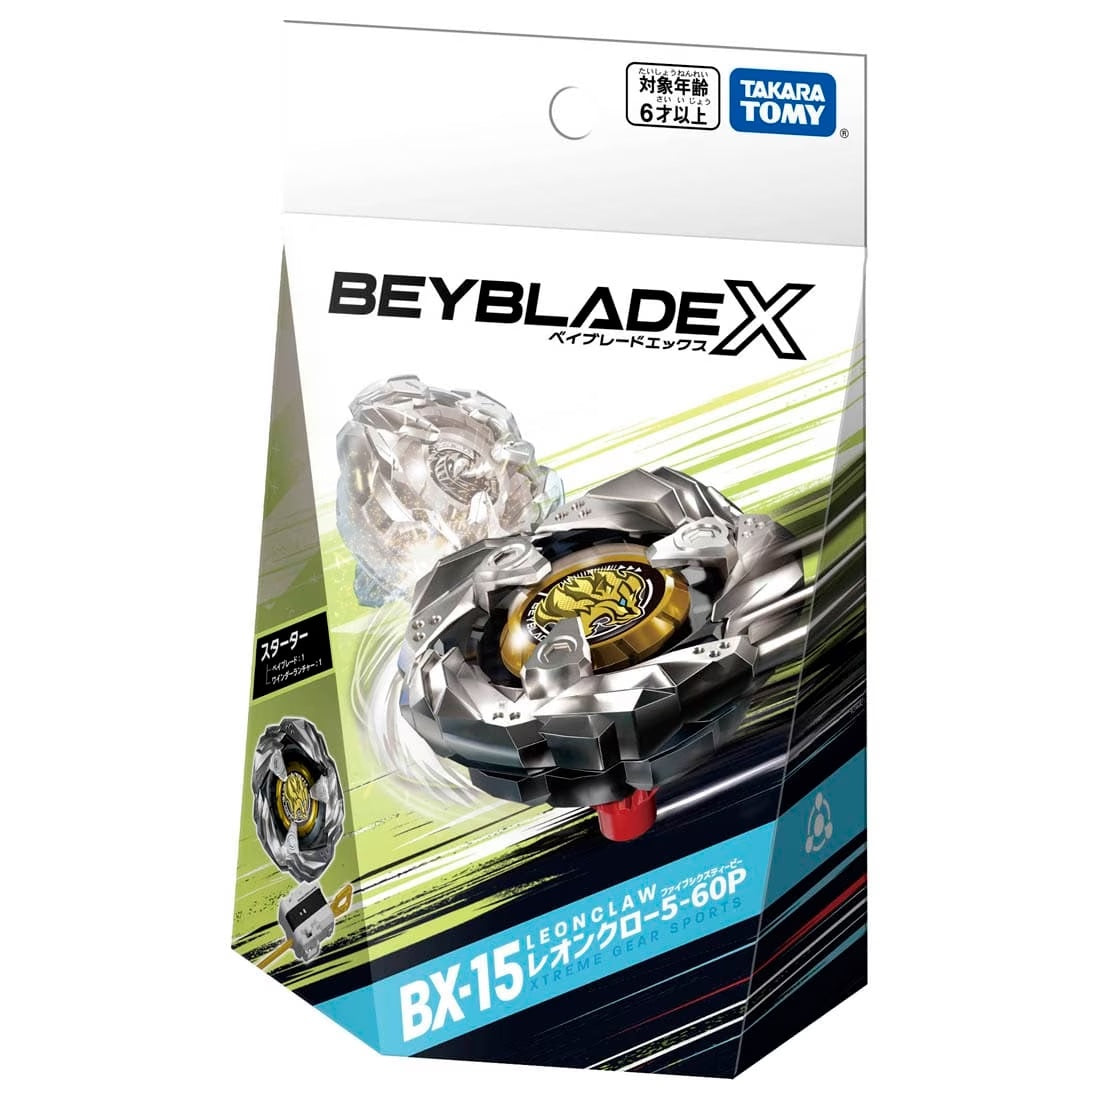 BEYBLADE X BX-15 スターター レオンクロー5-60P